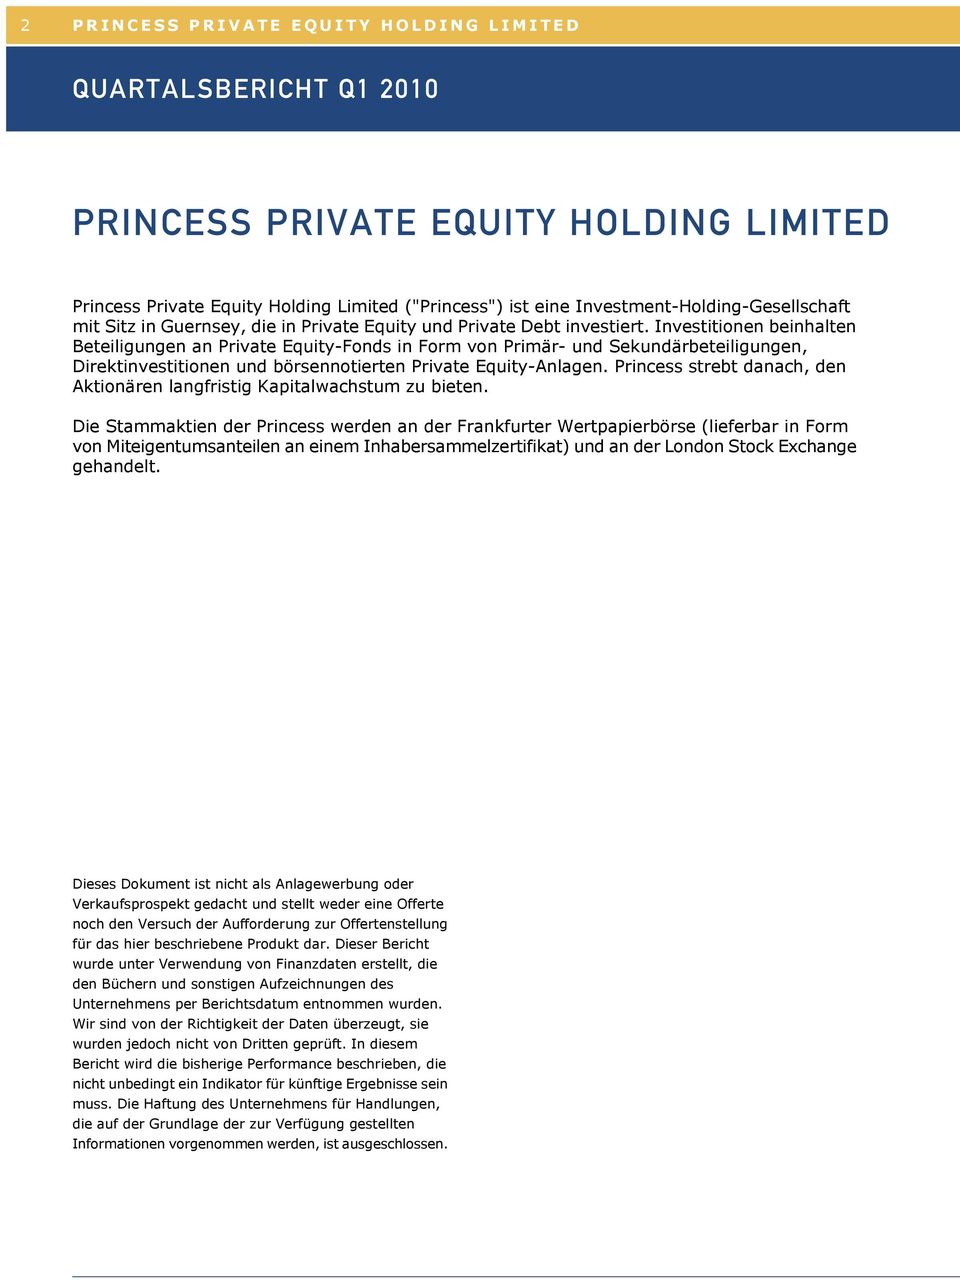 Princess strebt danach, den Aktionären langfristig Kapitalwachstum zu bieten.